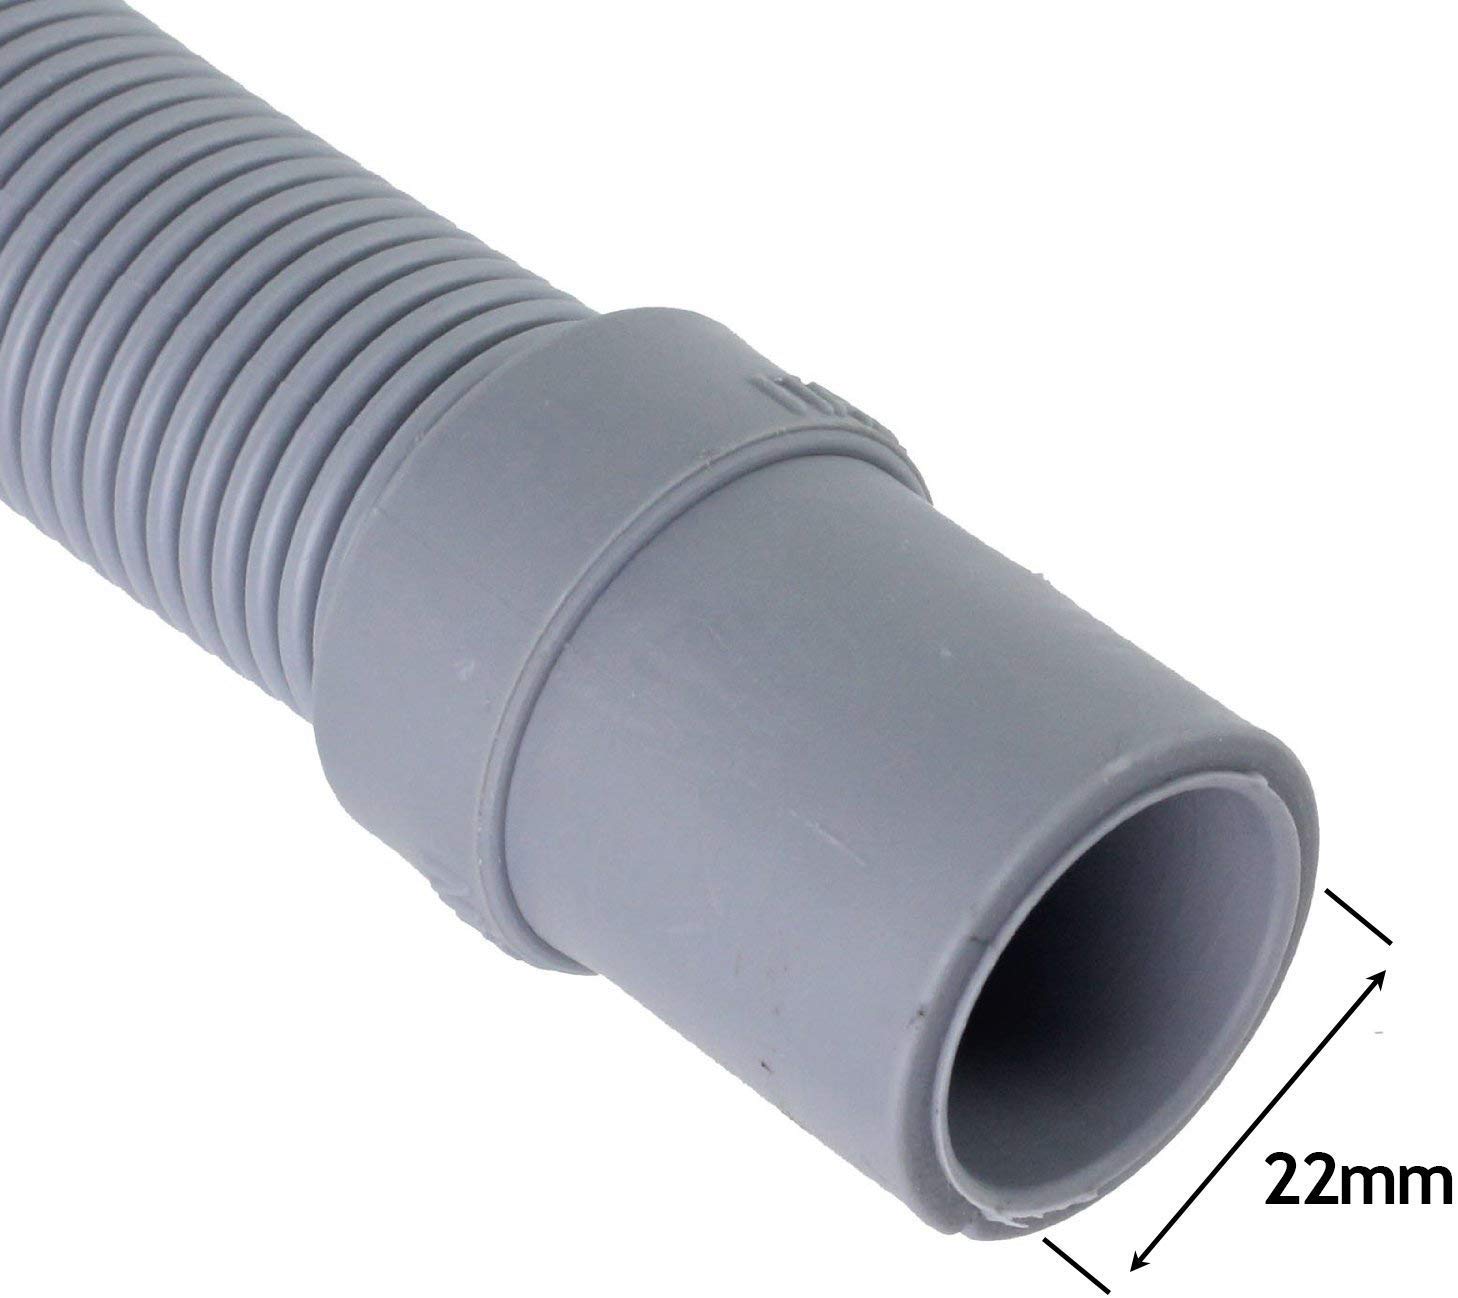 Drain Hose Extension Pipe Kit for Bush Washing Machine Dishwasher (2.5m, 19mm / 22mm)